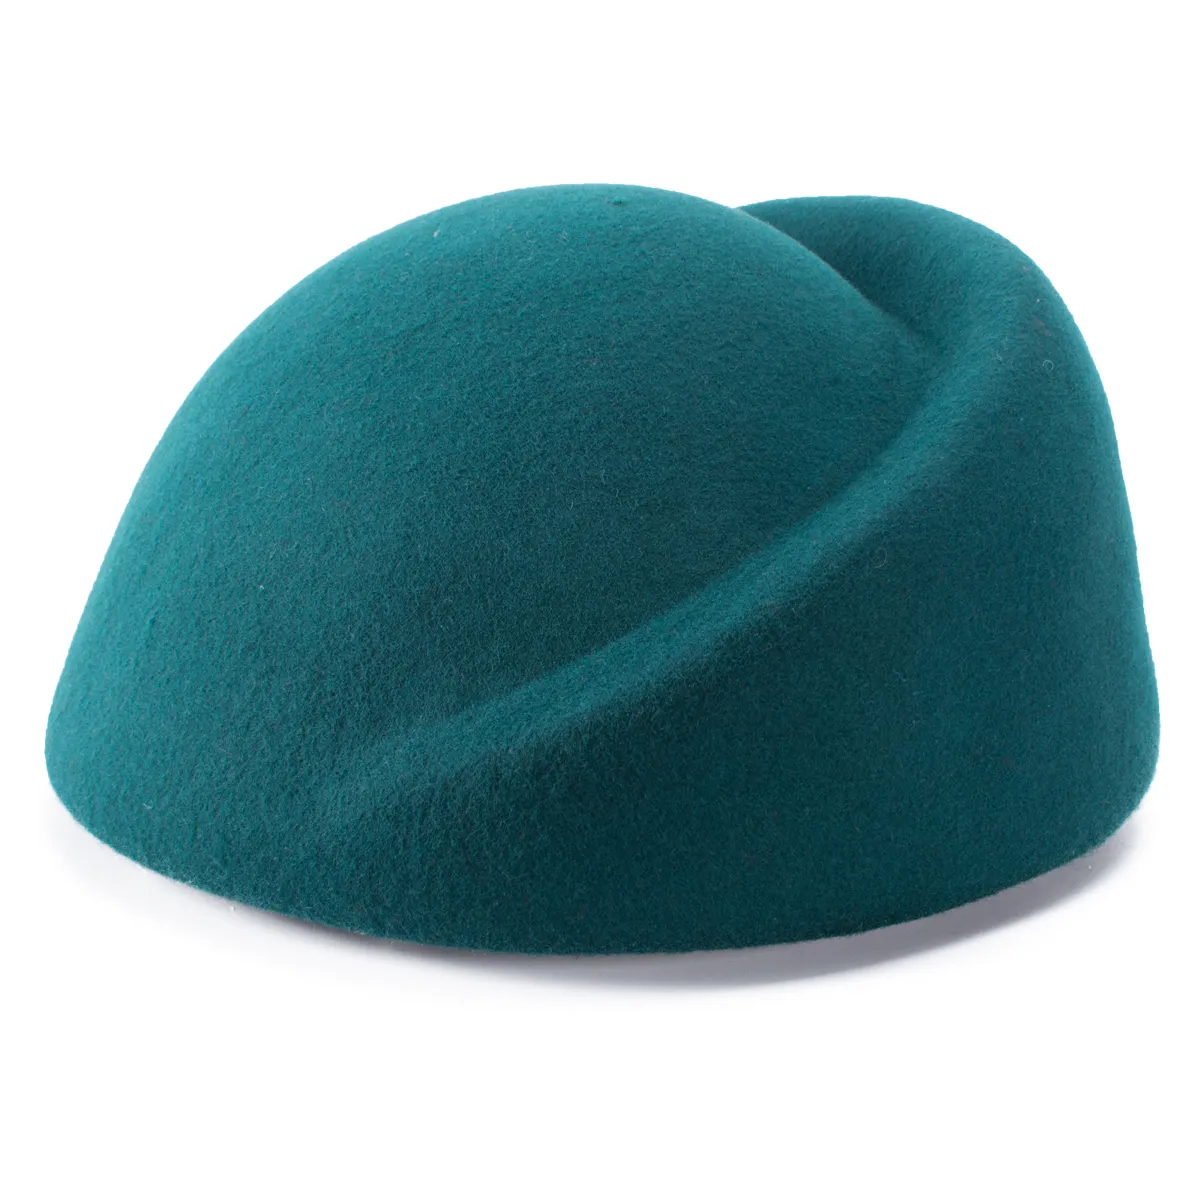 Lawliet winte baret hoeden voor vrouwen mode Franse wol baret air hostesses pillbox hoeden fascinators dames hoeden a137 2010193198657